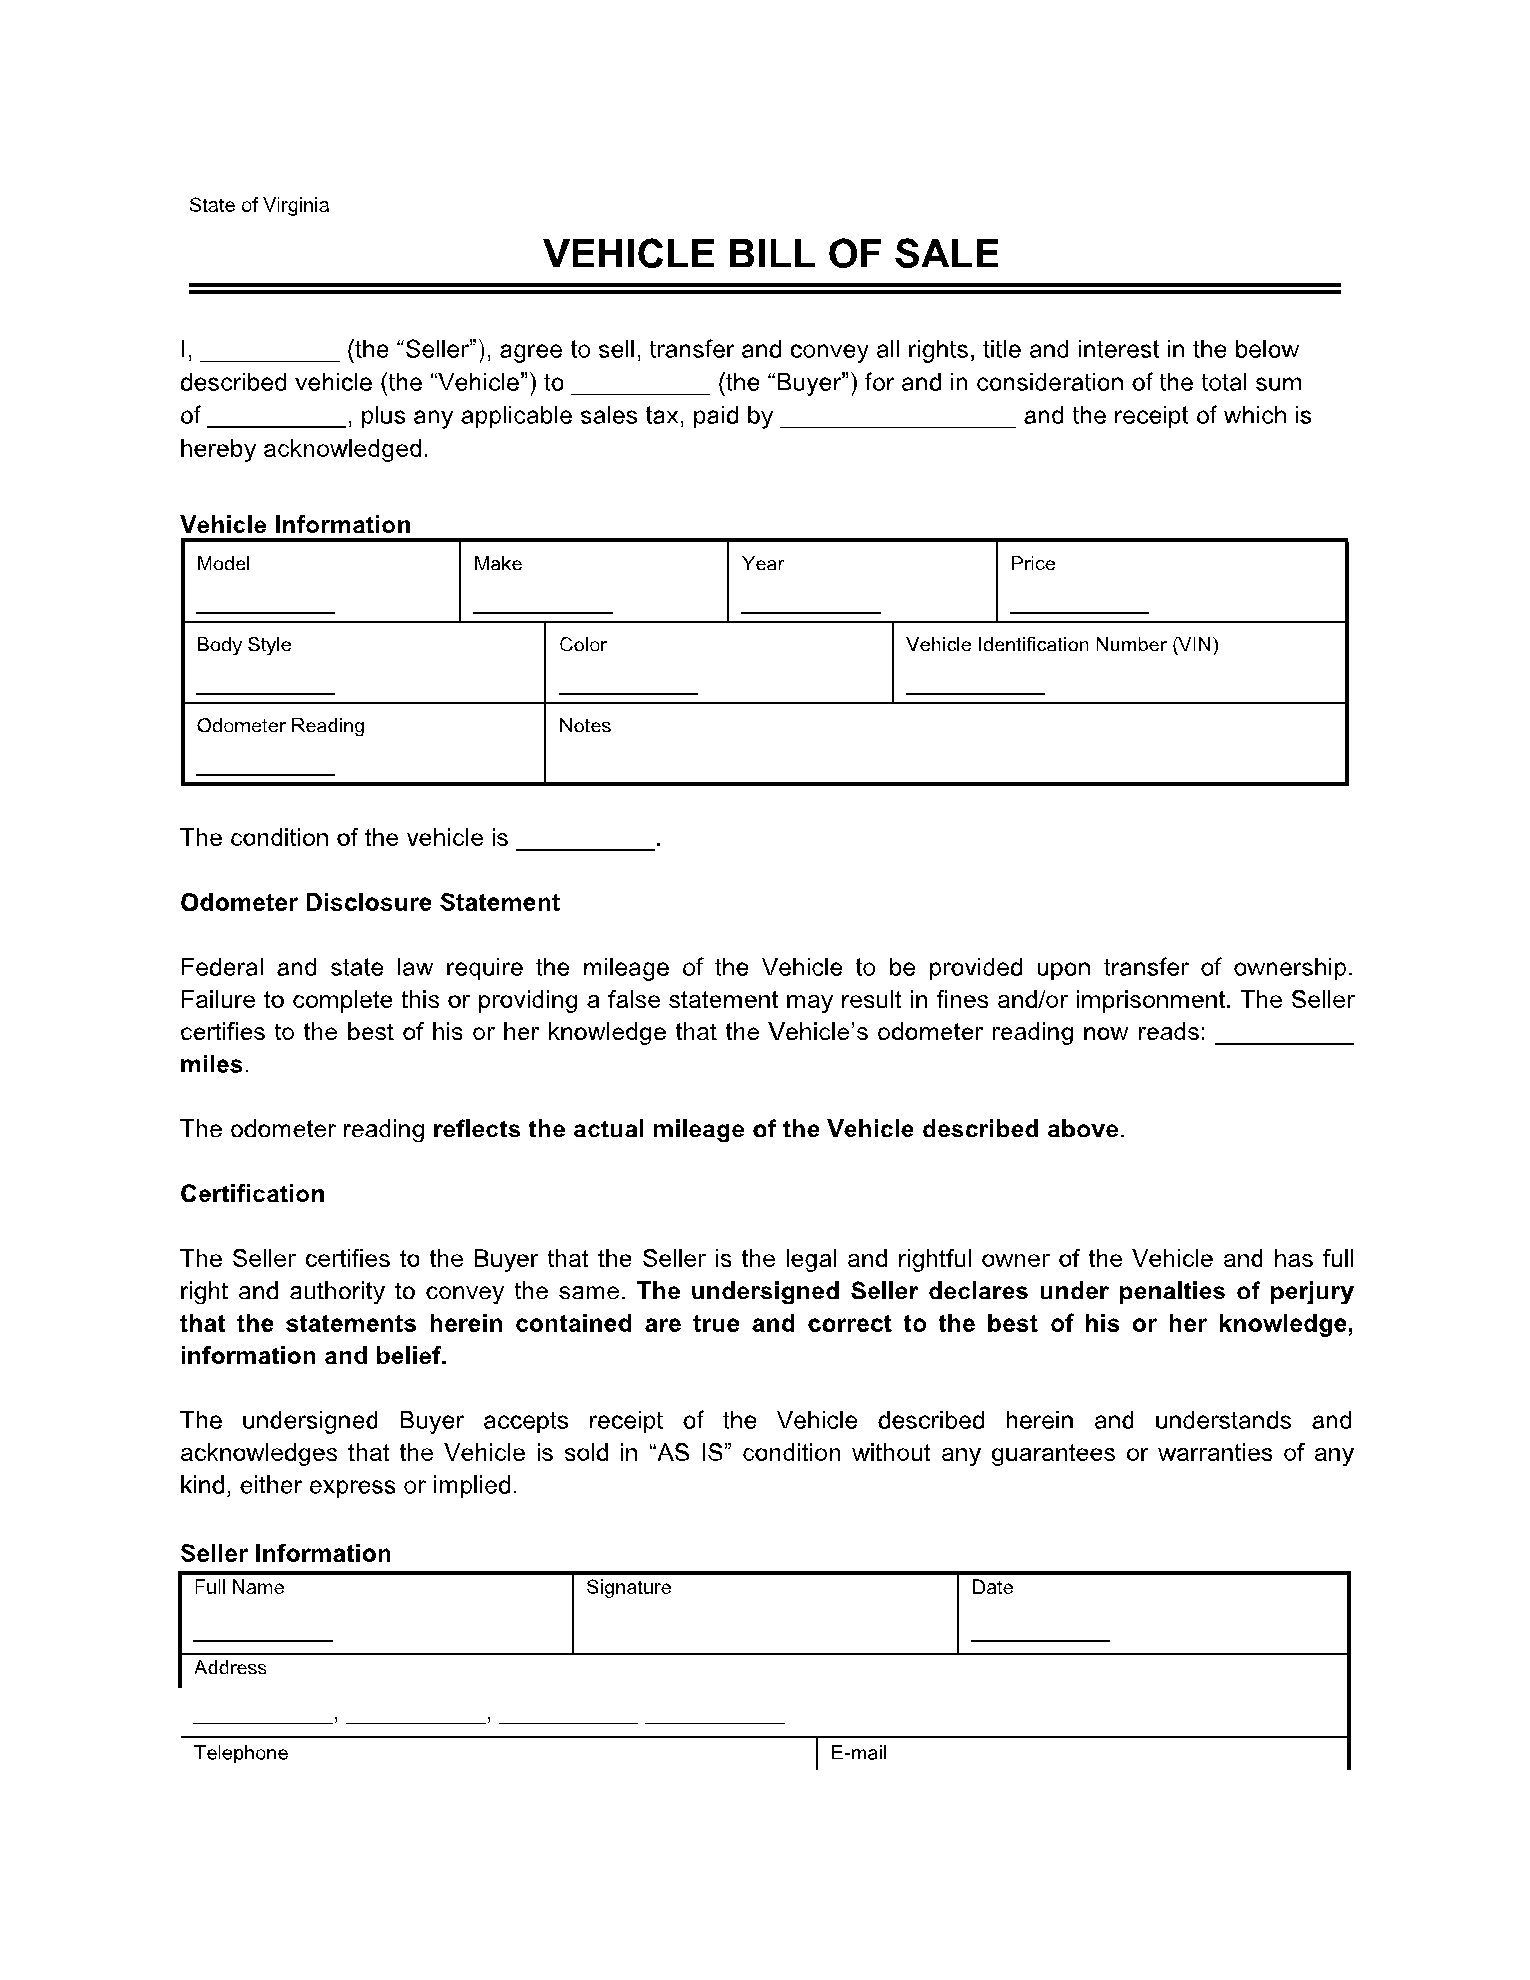 Vehicle Bill of Sale in Virginia